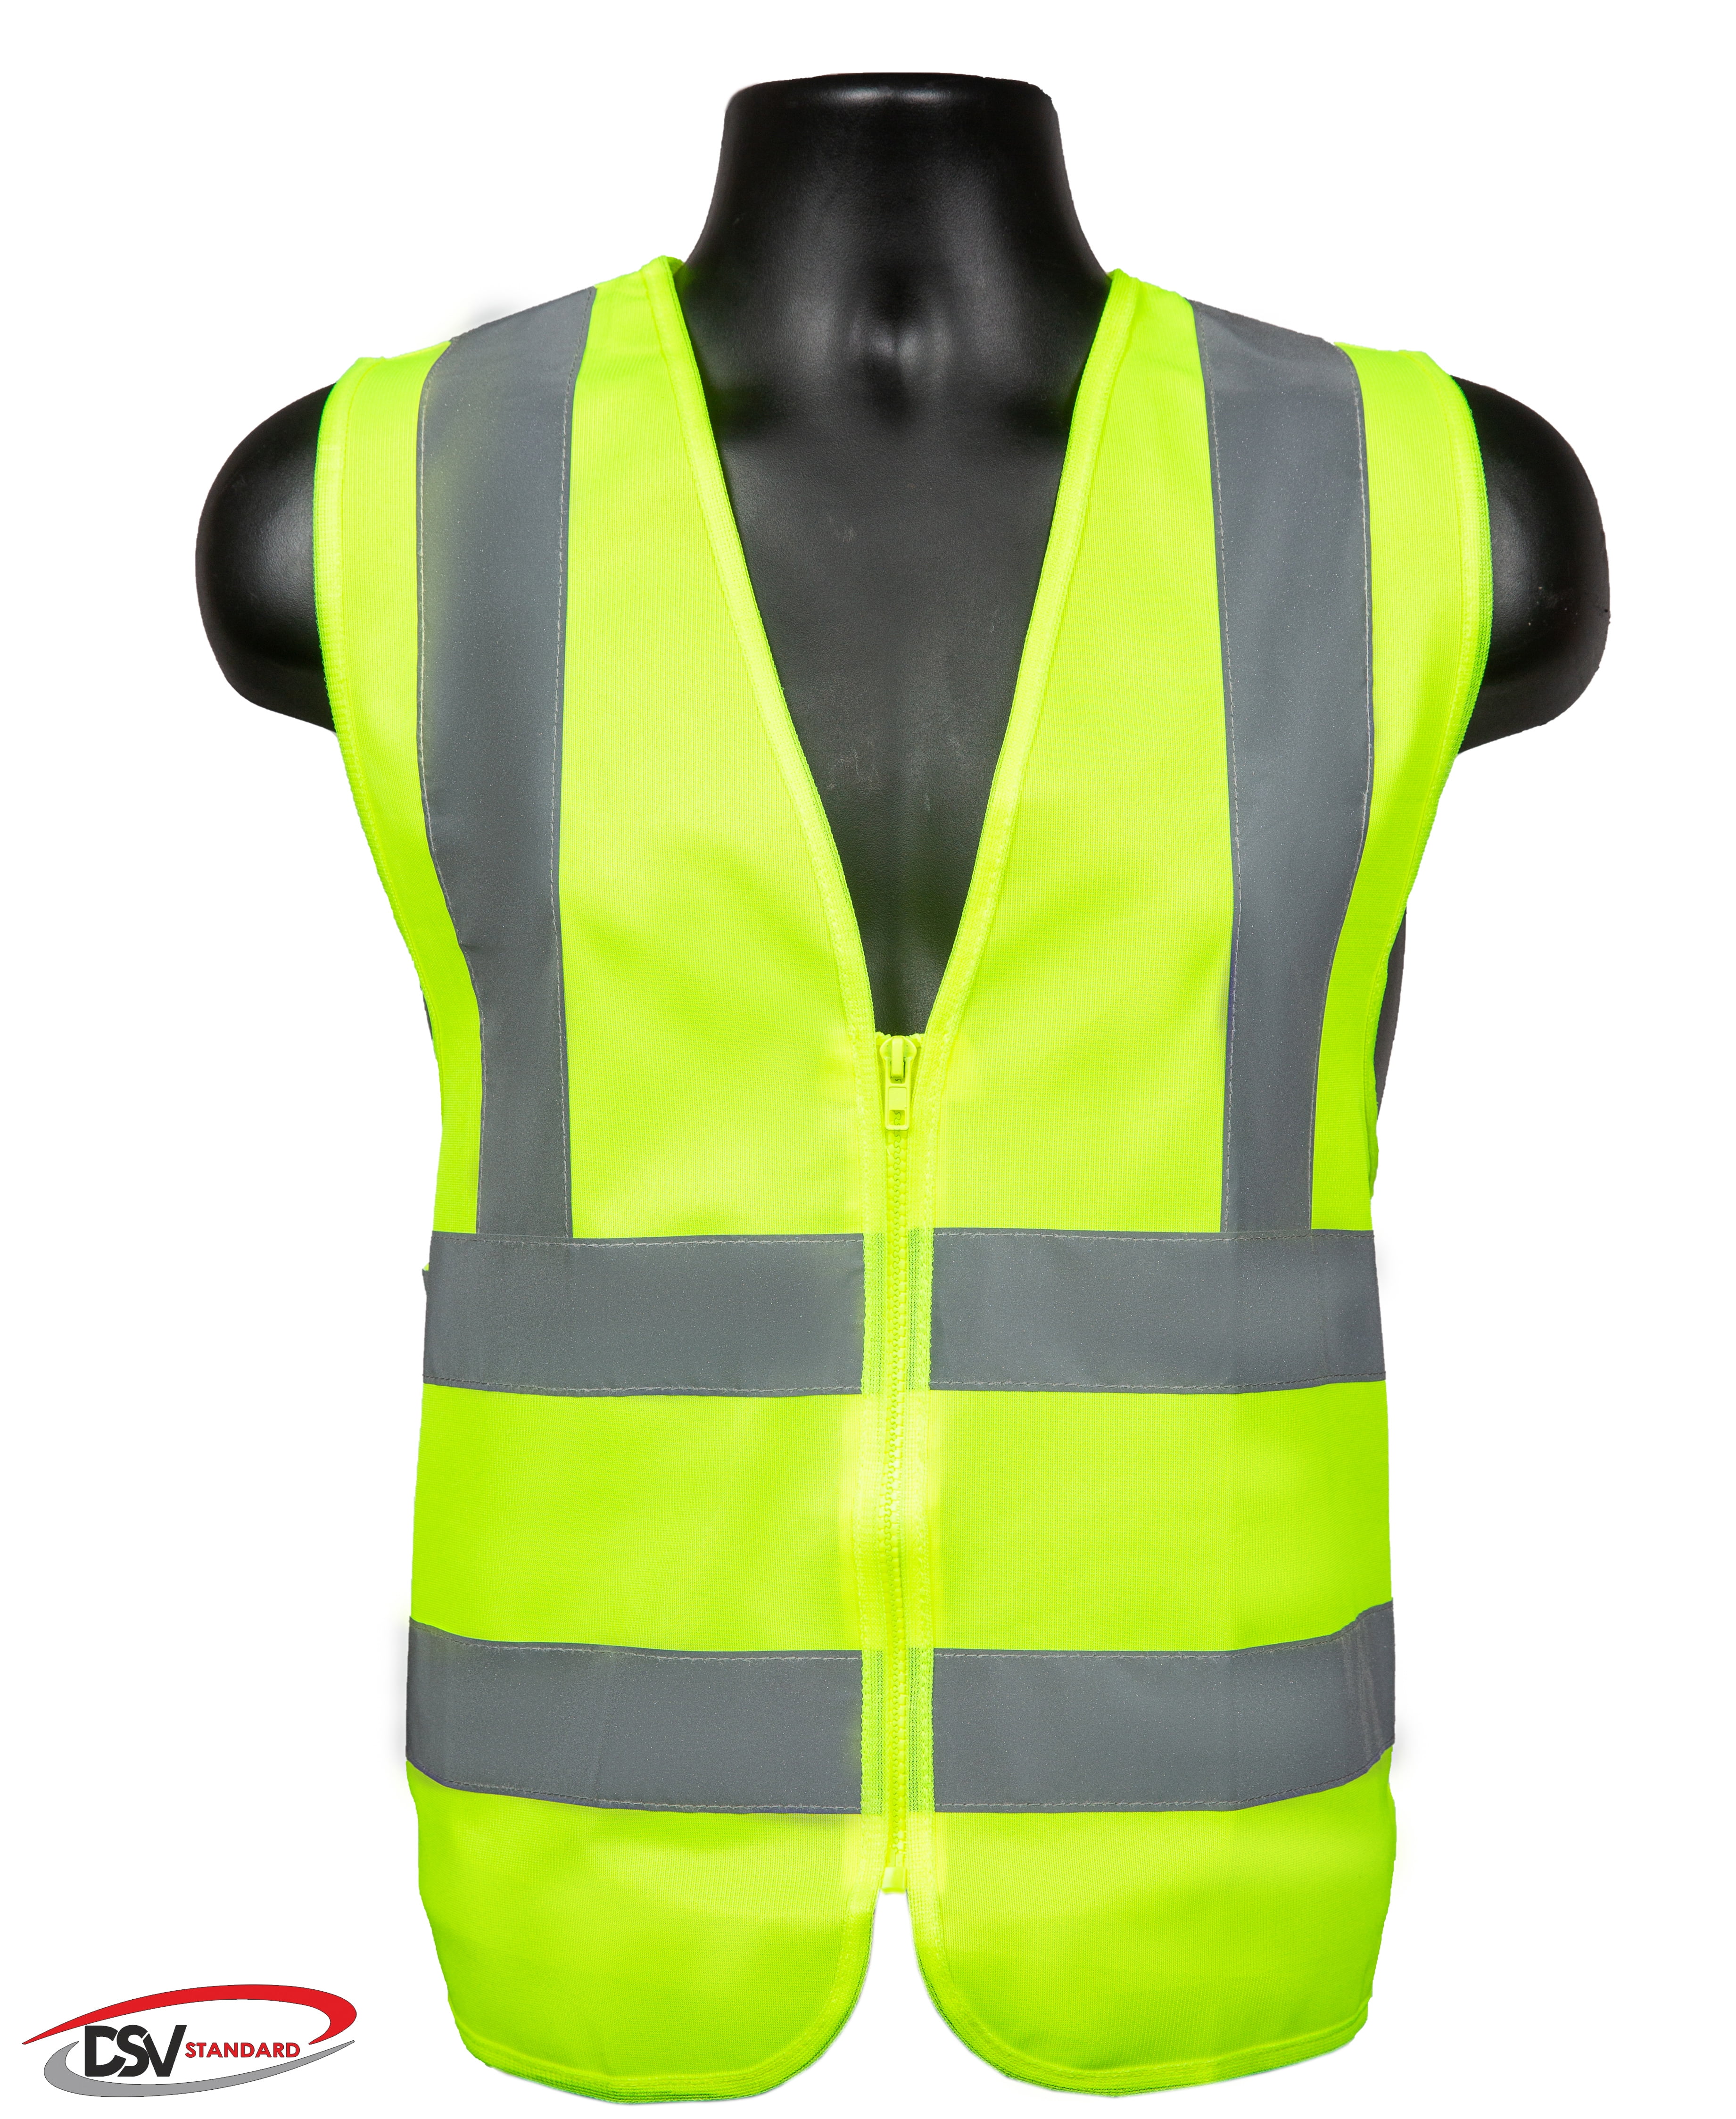 Light weight High Visibility Reflective Vest Stripes Jacket Safety Stripes 2019 